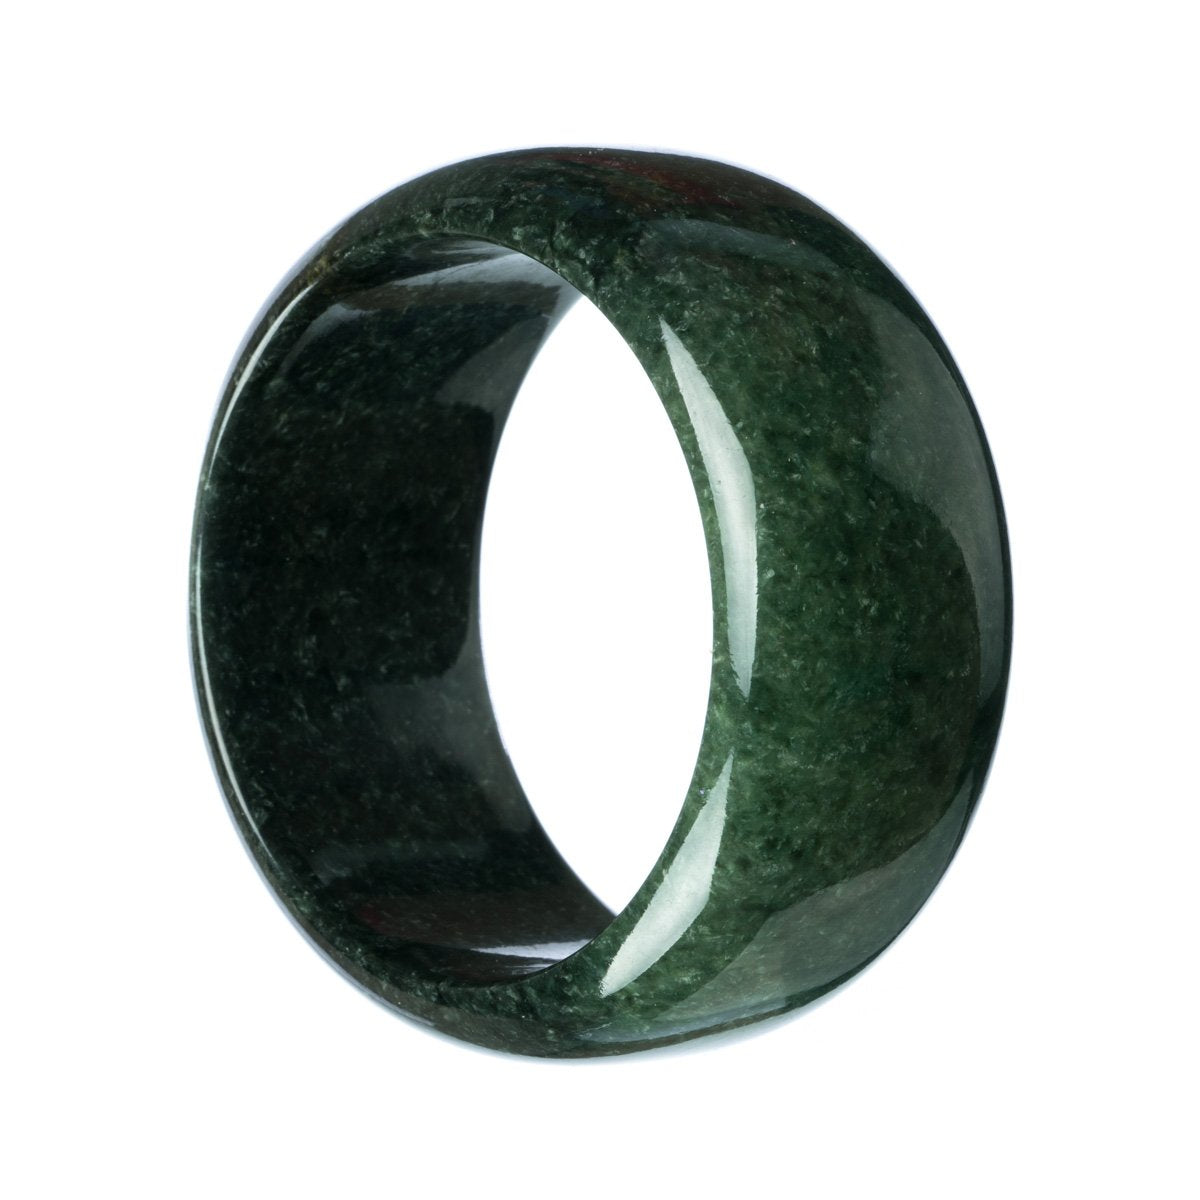 A flat, 63mm genuine natural black jade bangle from MAYS.